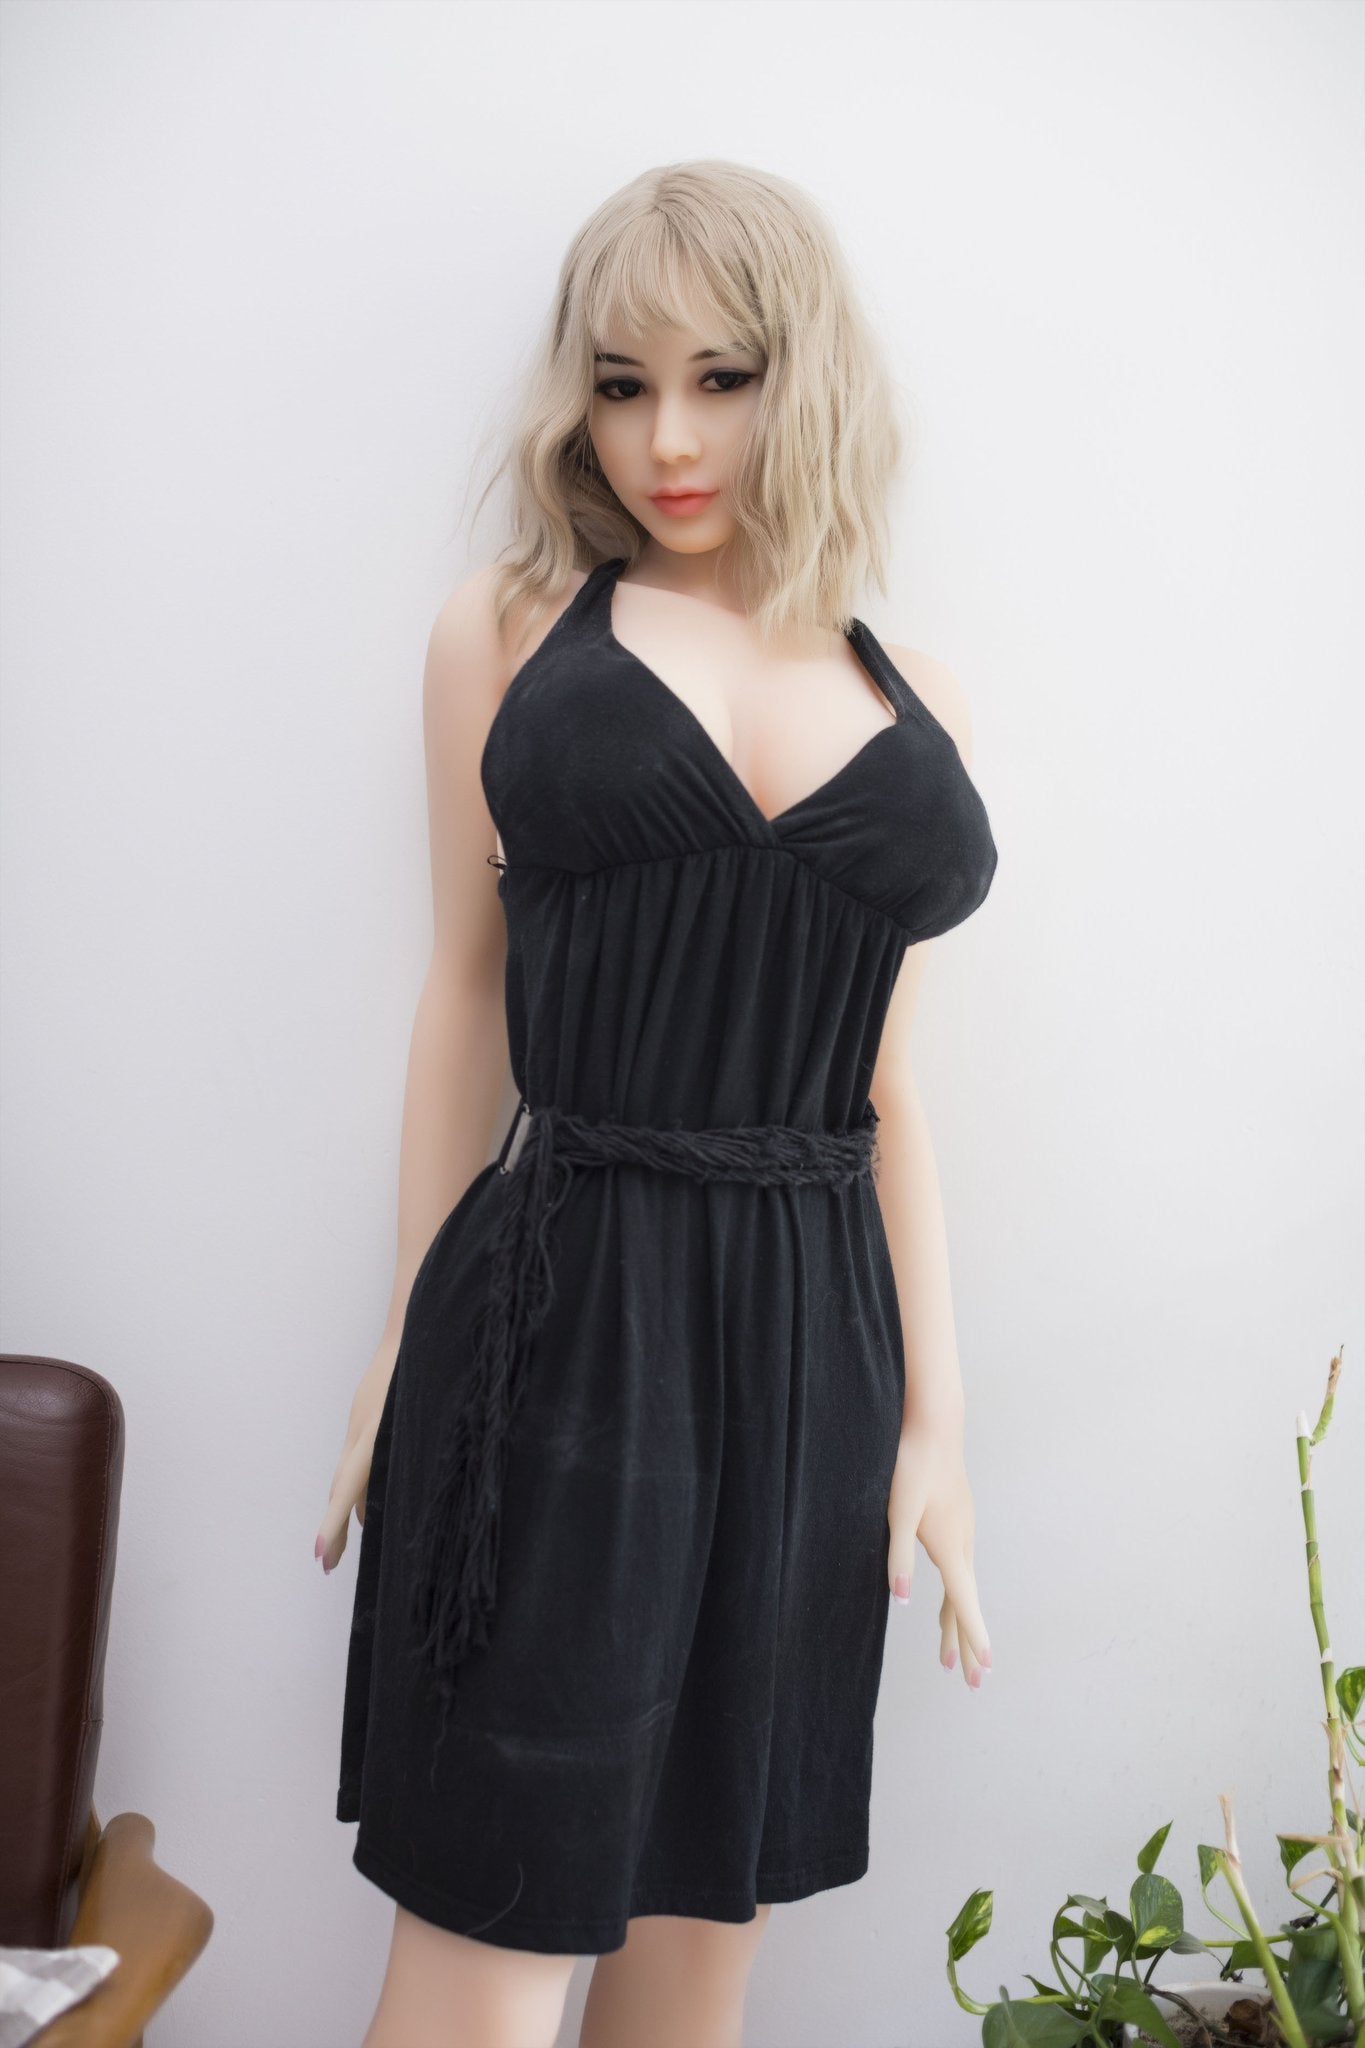 bellinda 168cm blonde big boobs skinny tpe wm sex doll(2)